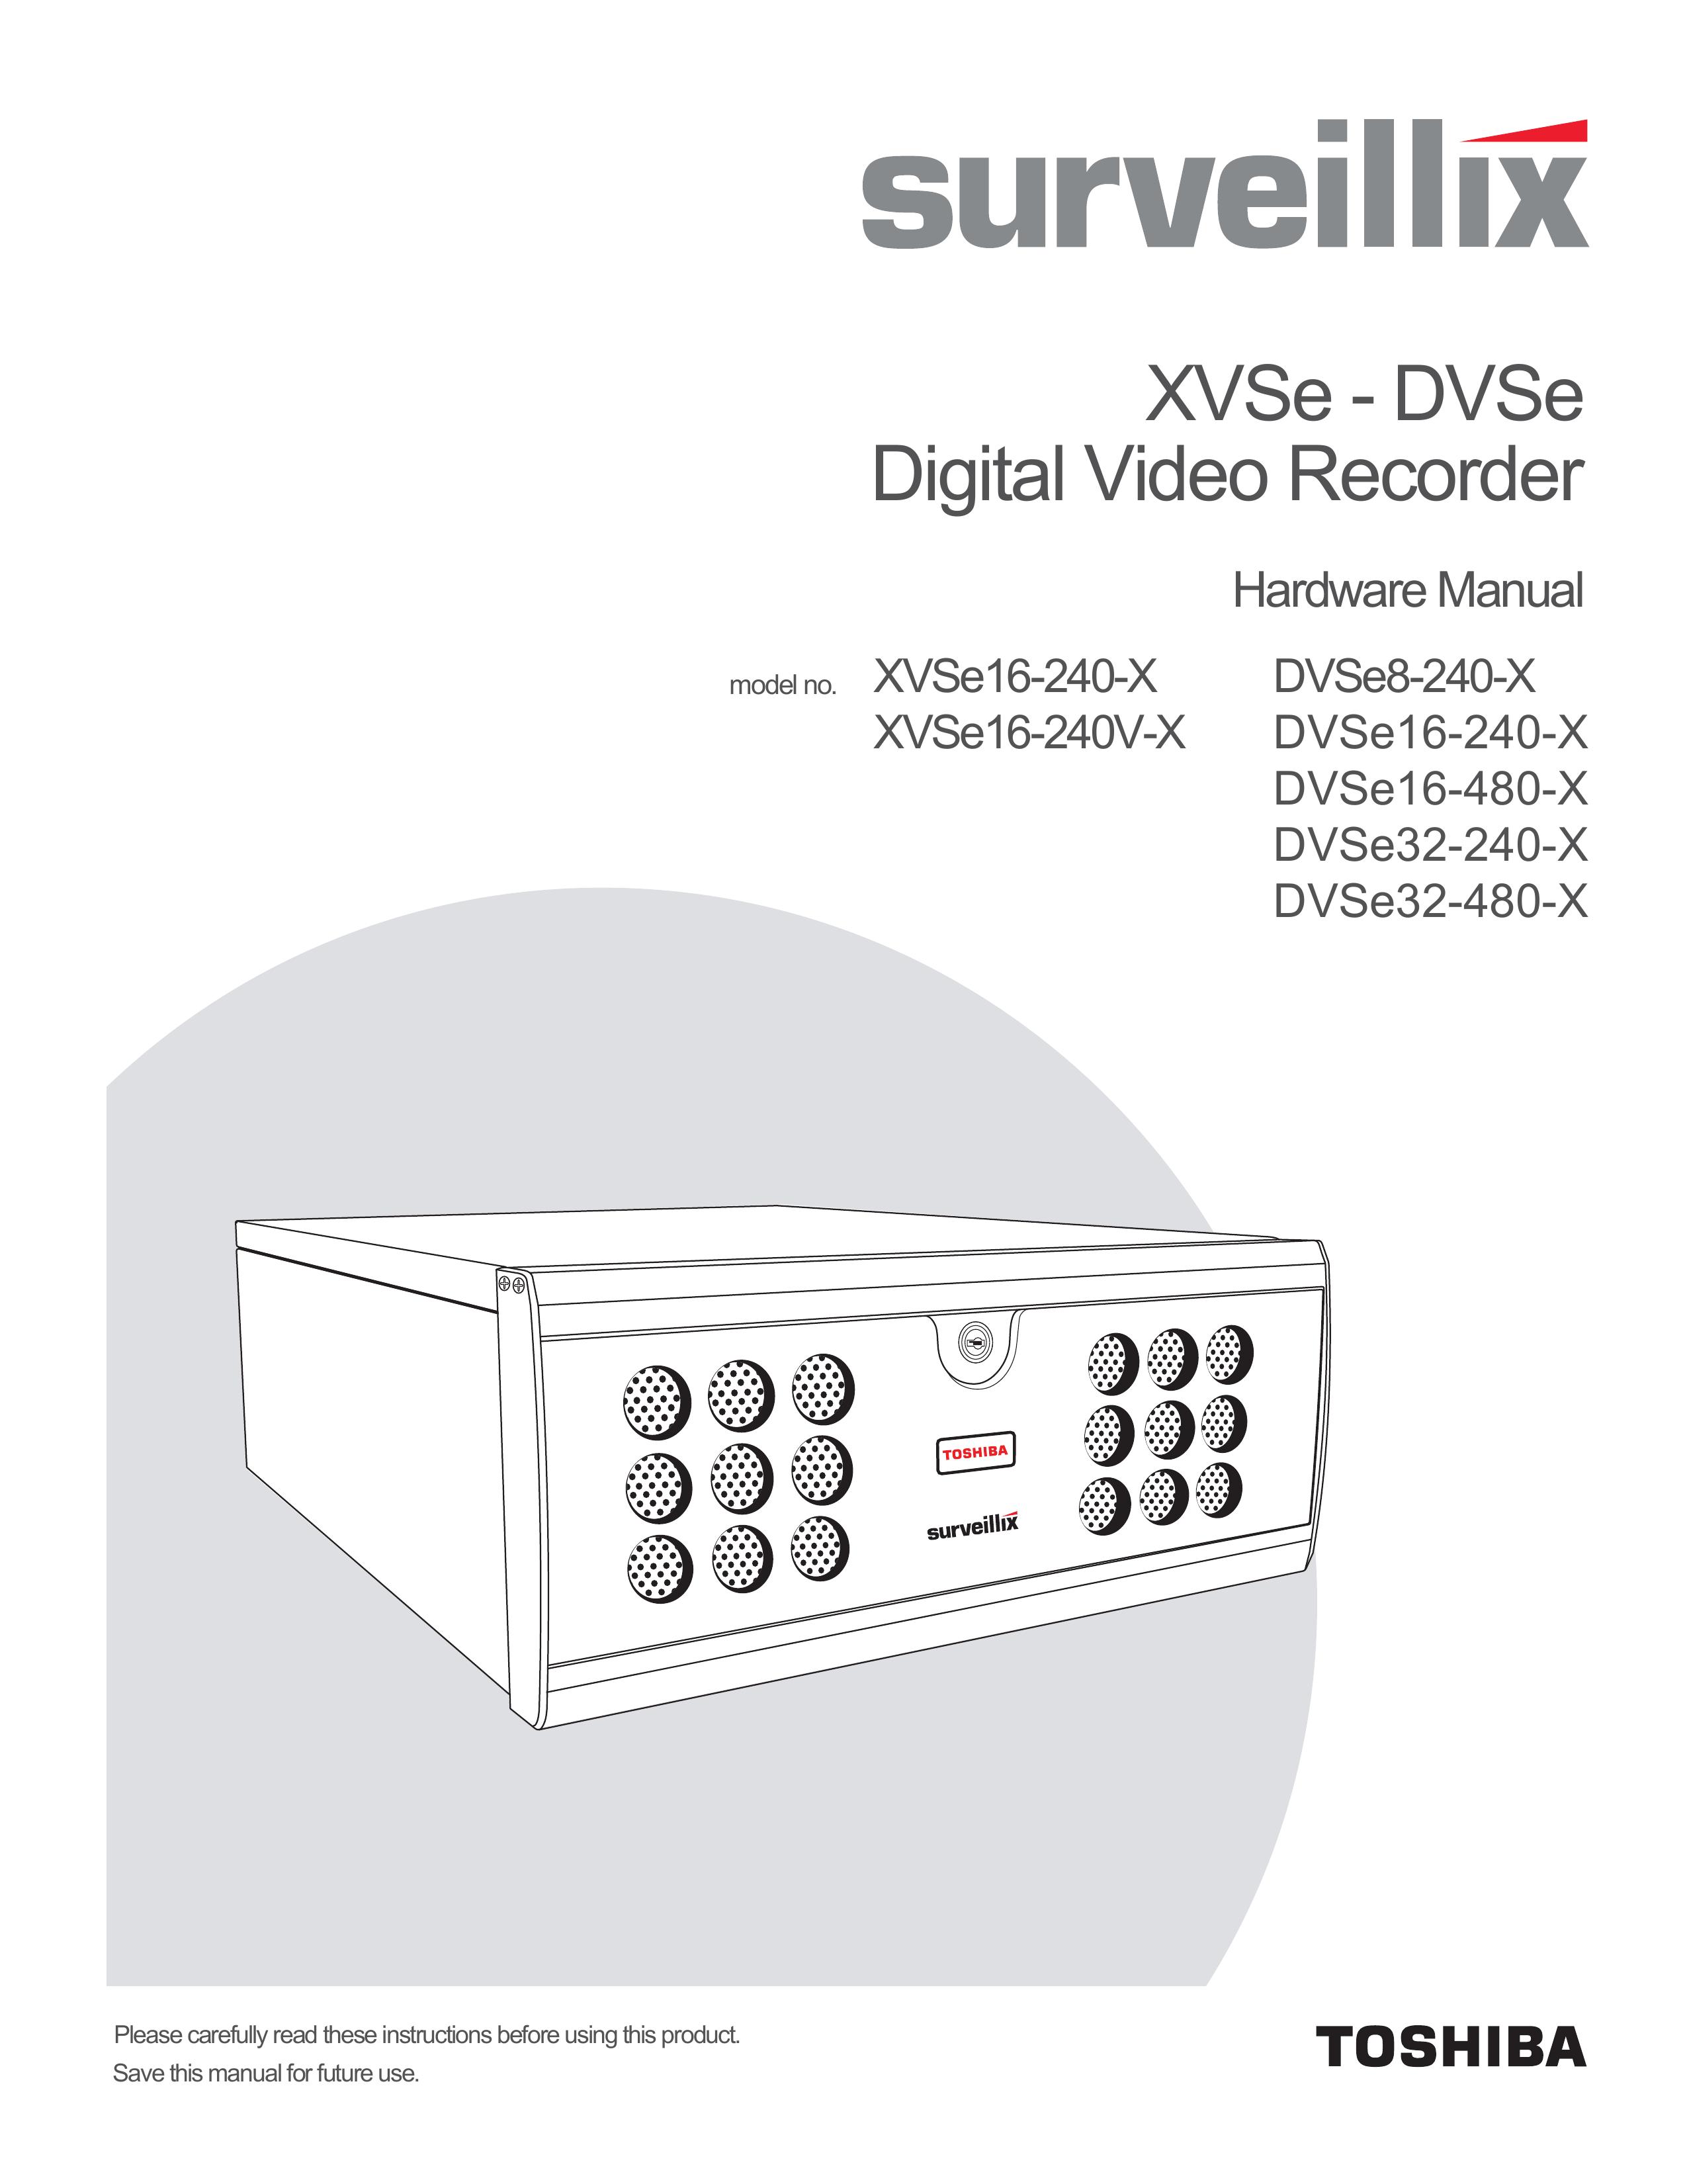 Toshiba DVSe16-480-X Digital Photo Keychain User Manual